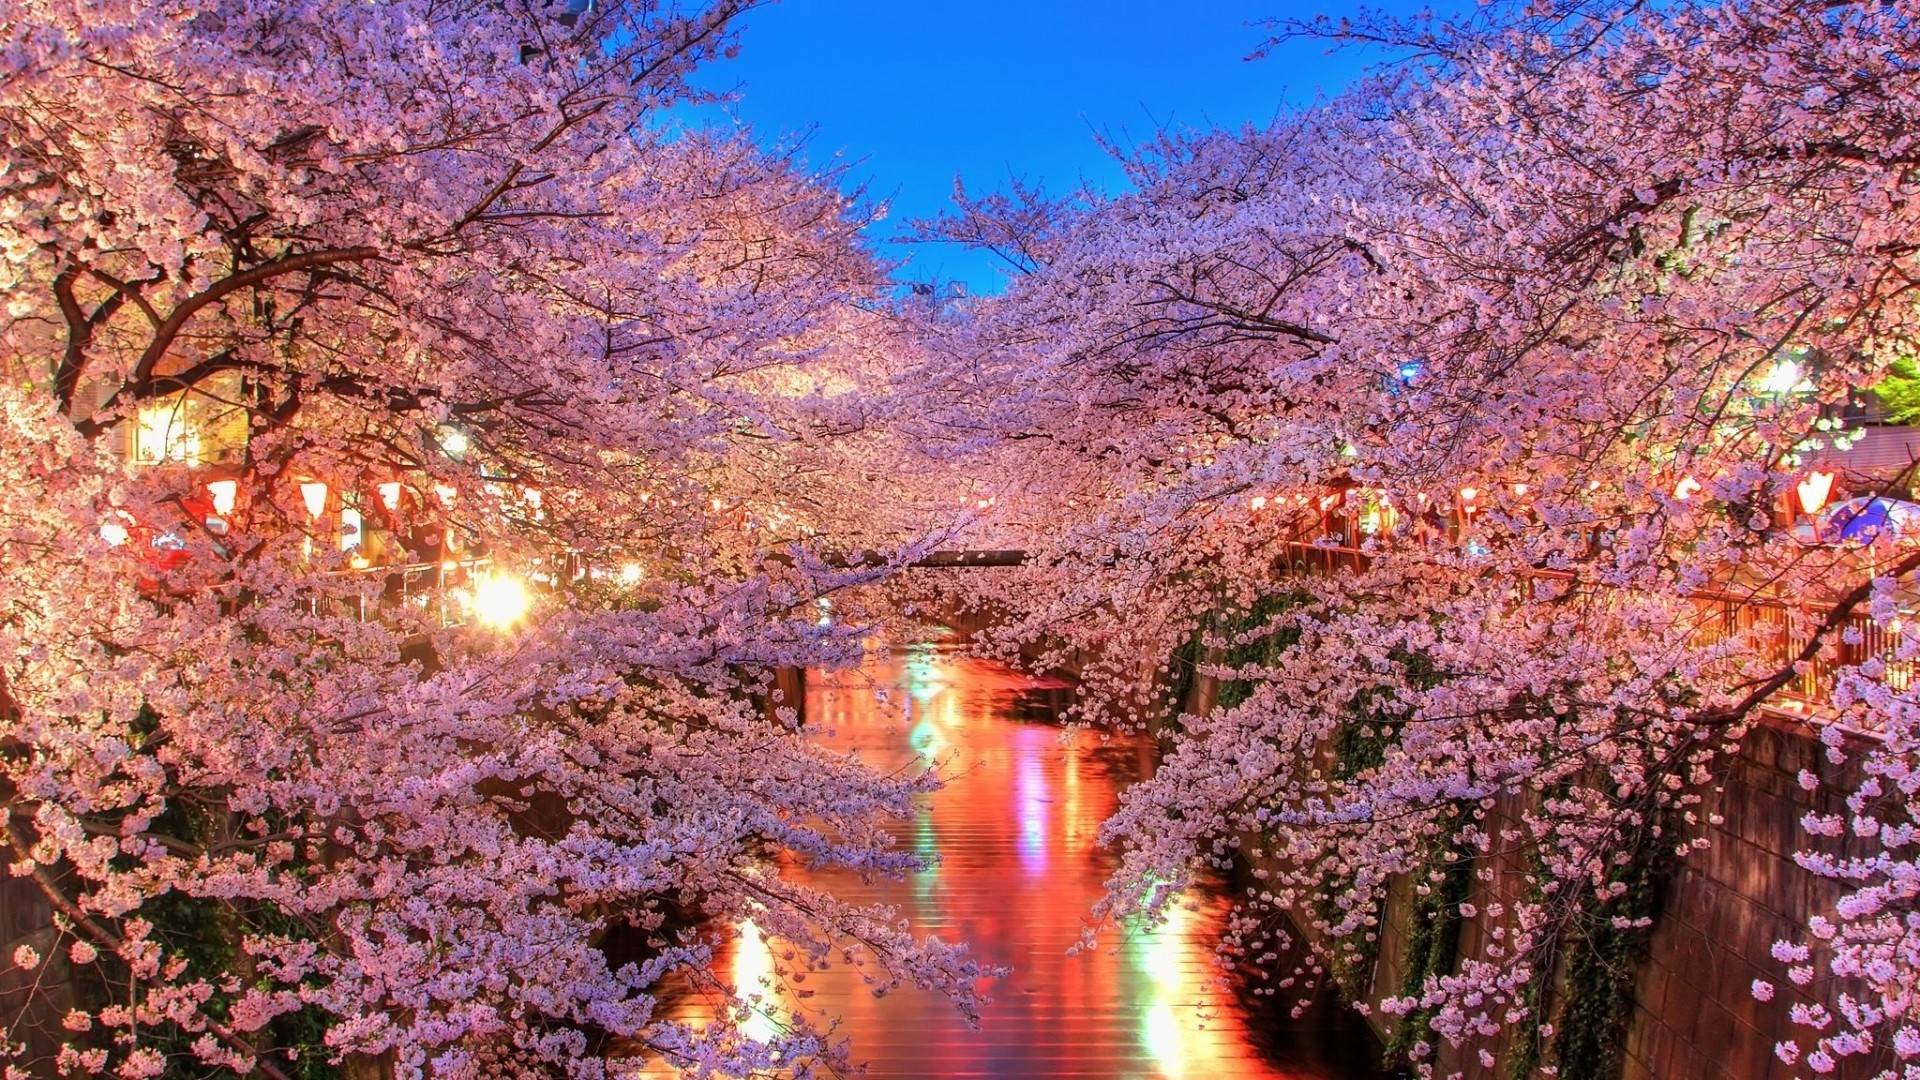 so nice cherry blossom image